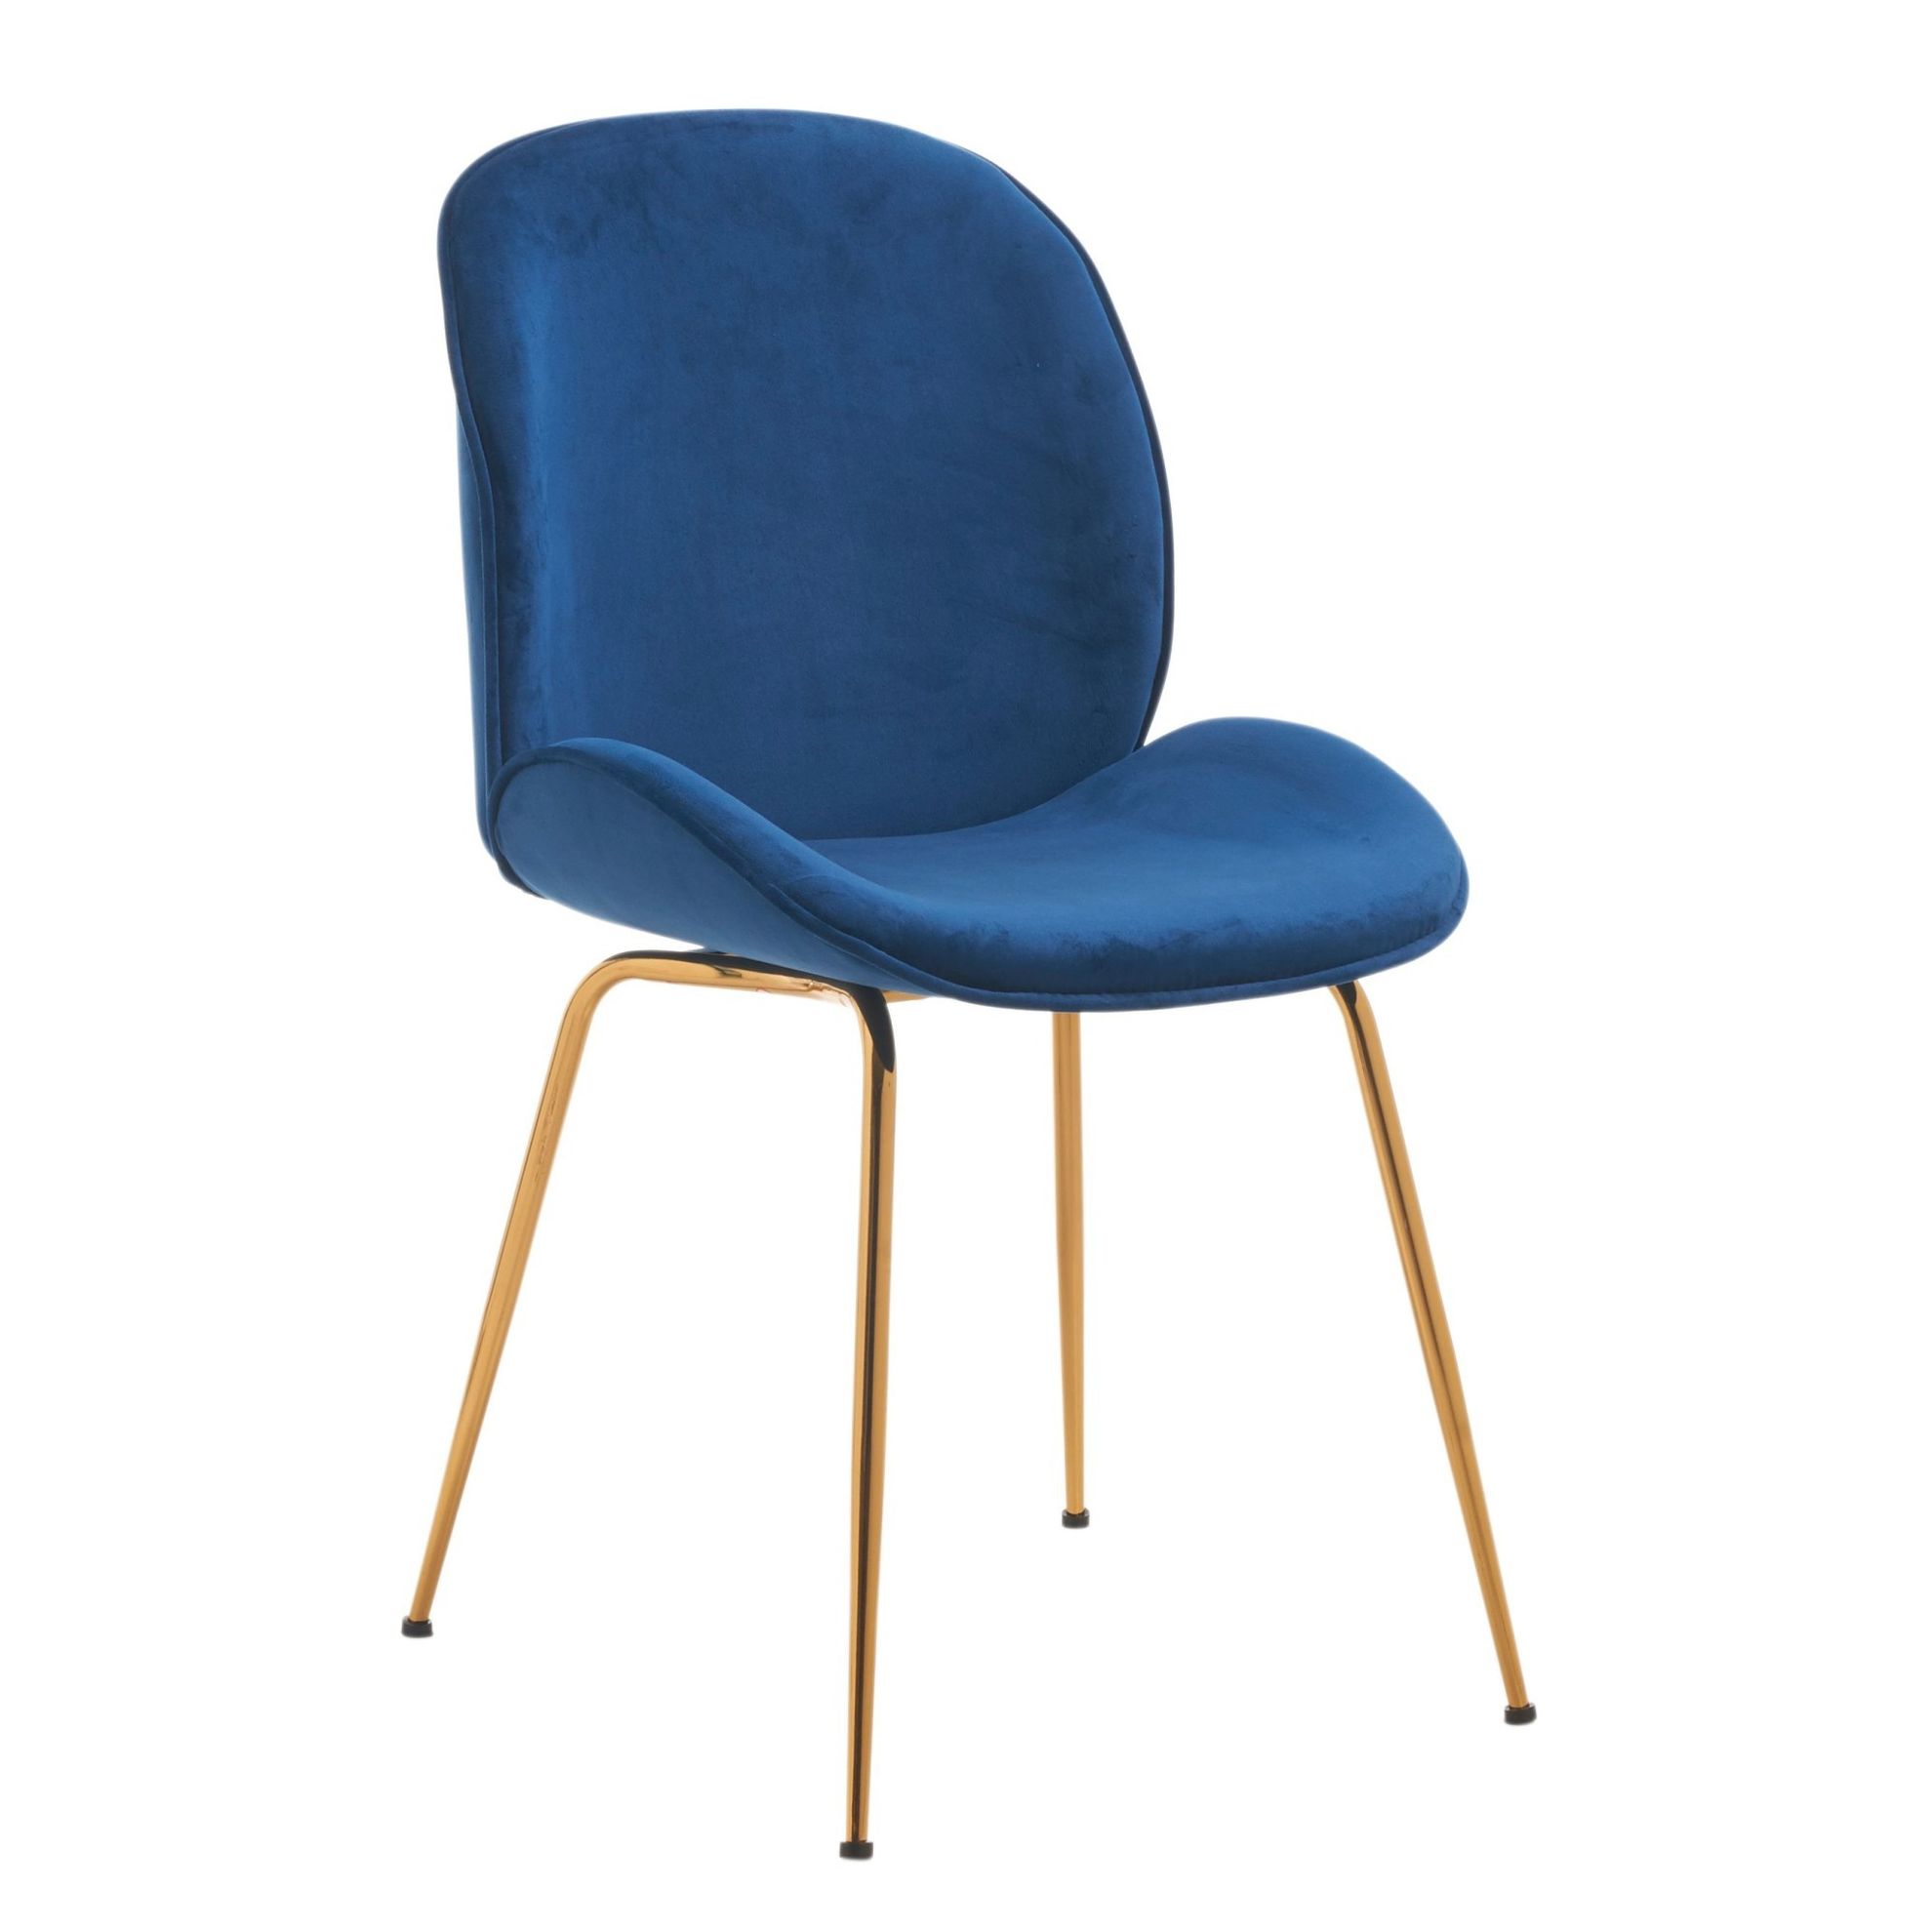 Stuhl Velvet Farbe: Blau jetzt bei Weltbild.de bestellen